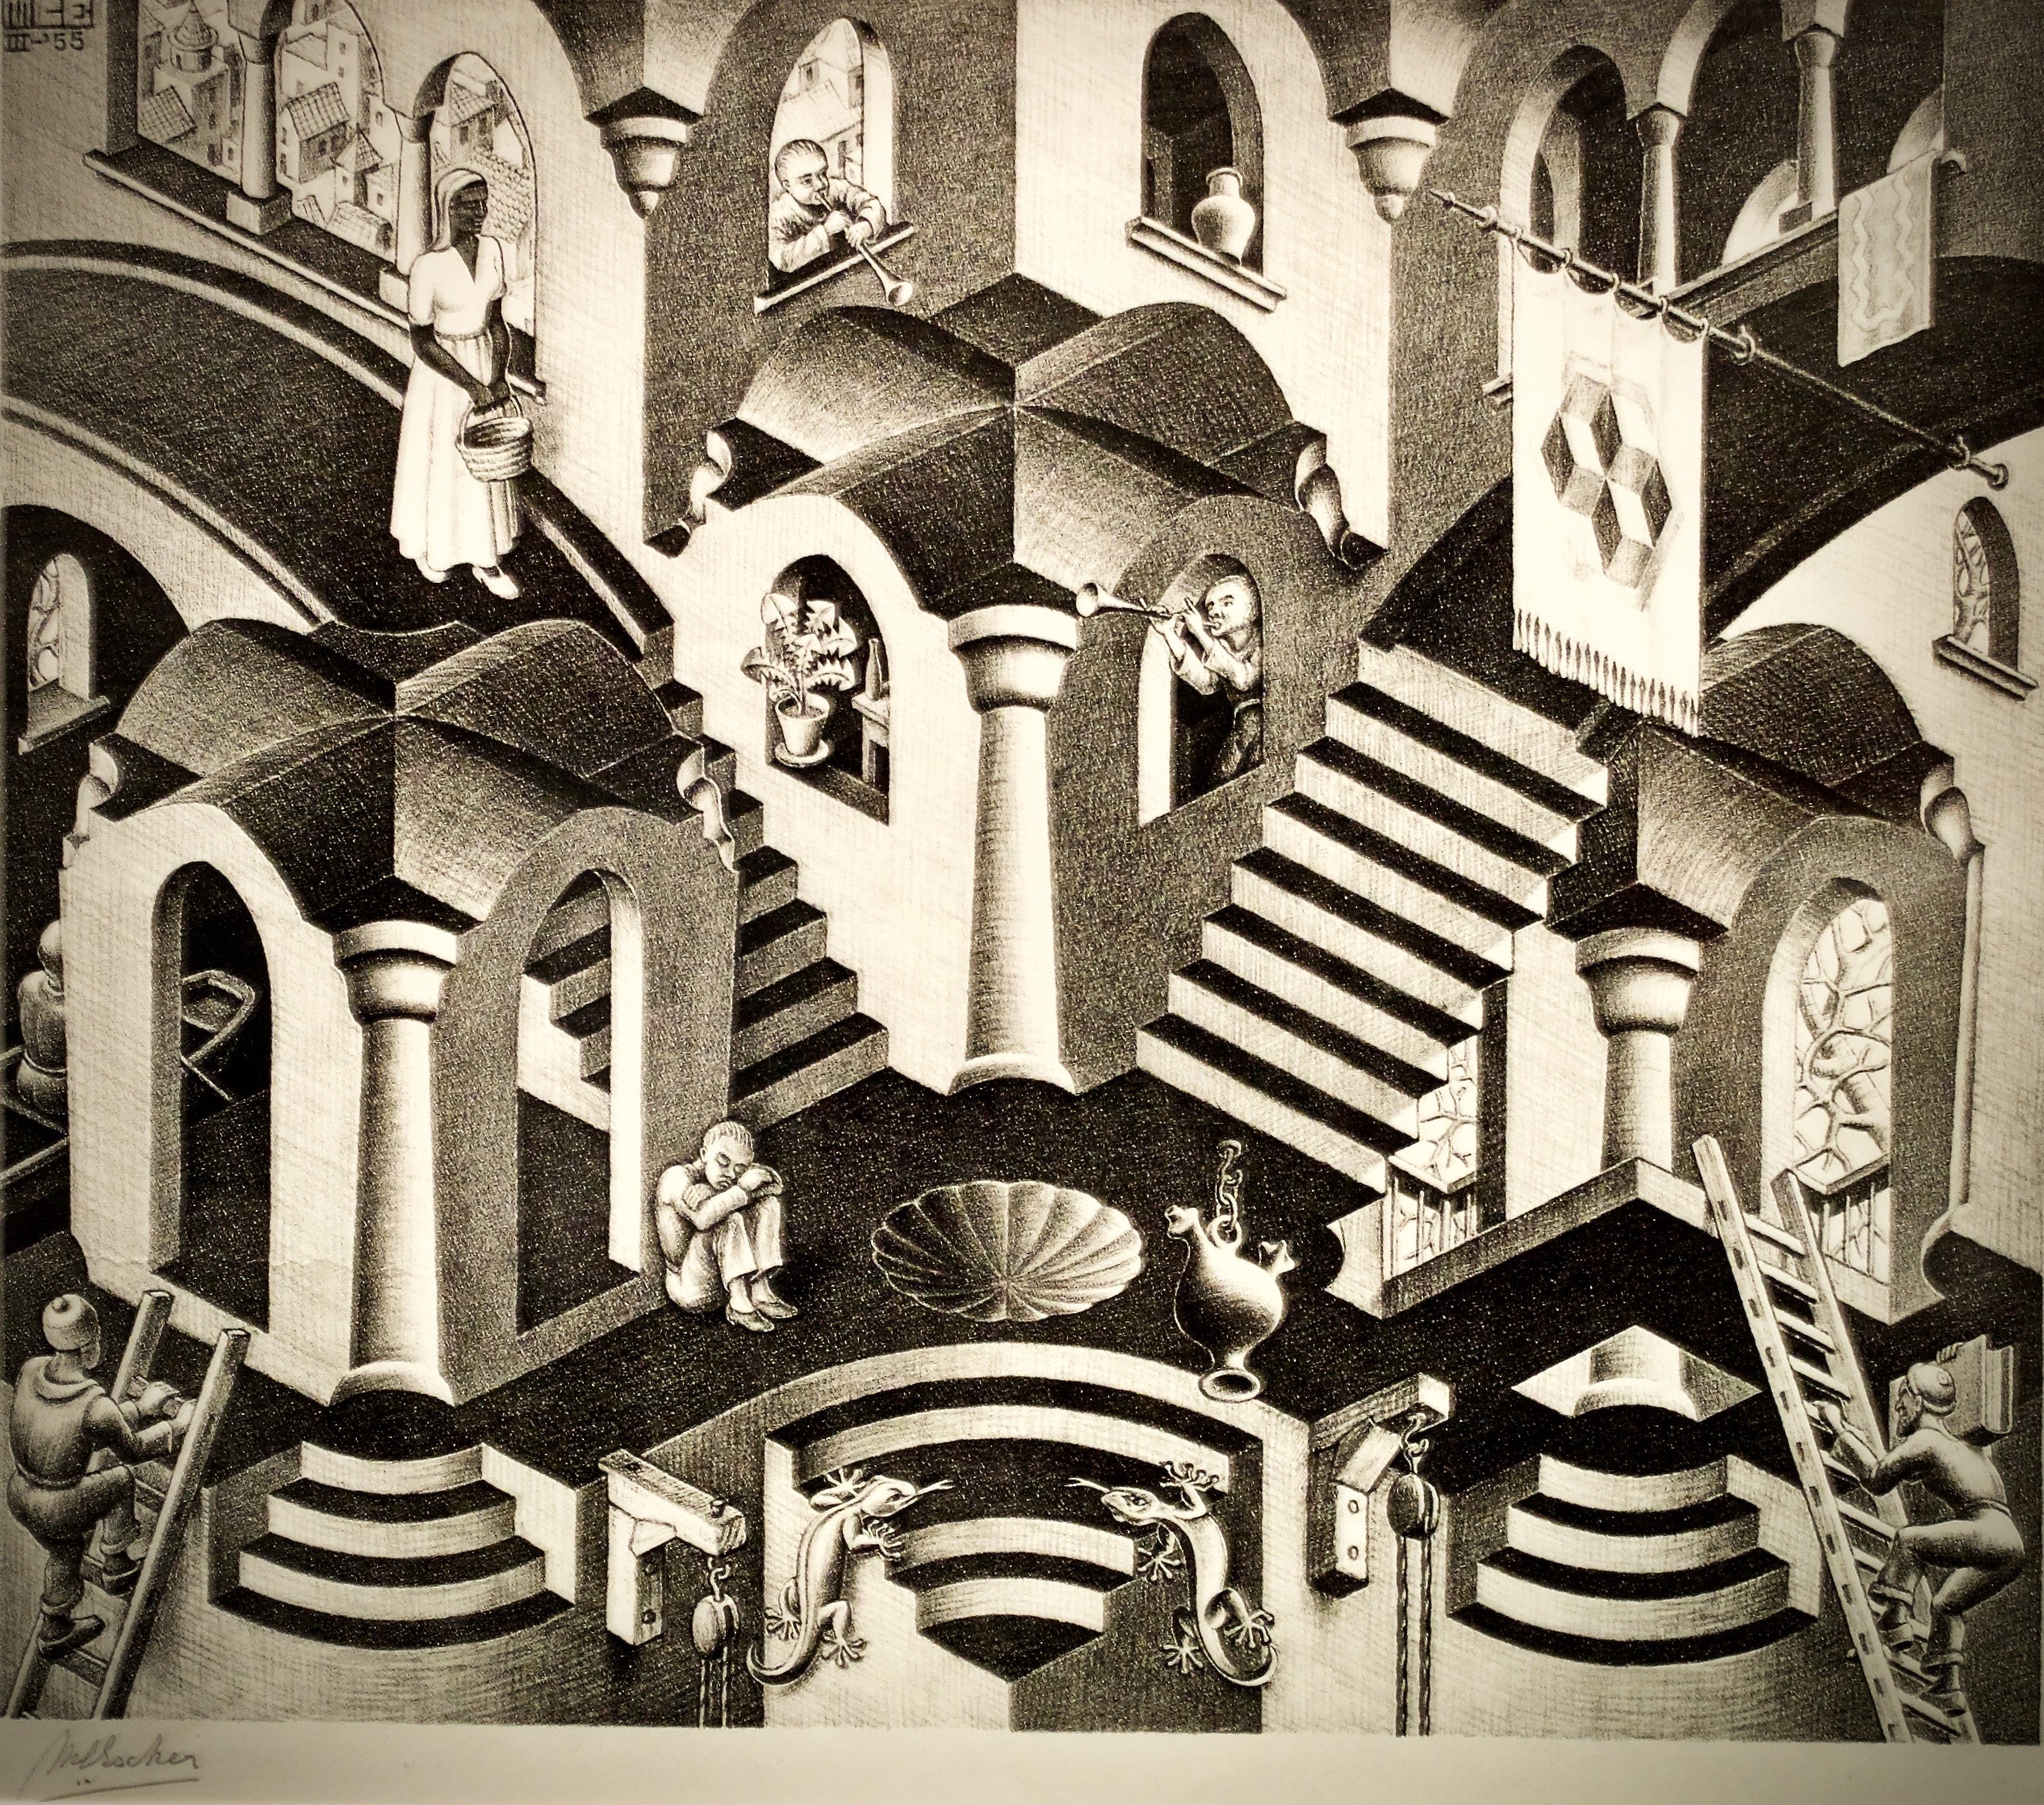 Convex and concave (1955) - Maurits Cornelis Escher (1898 - 1972)